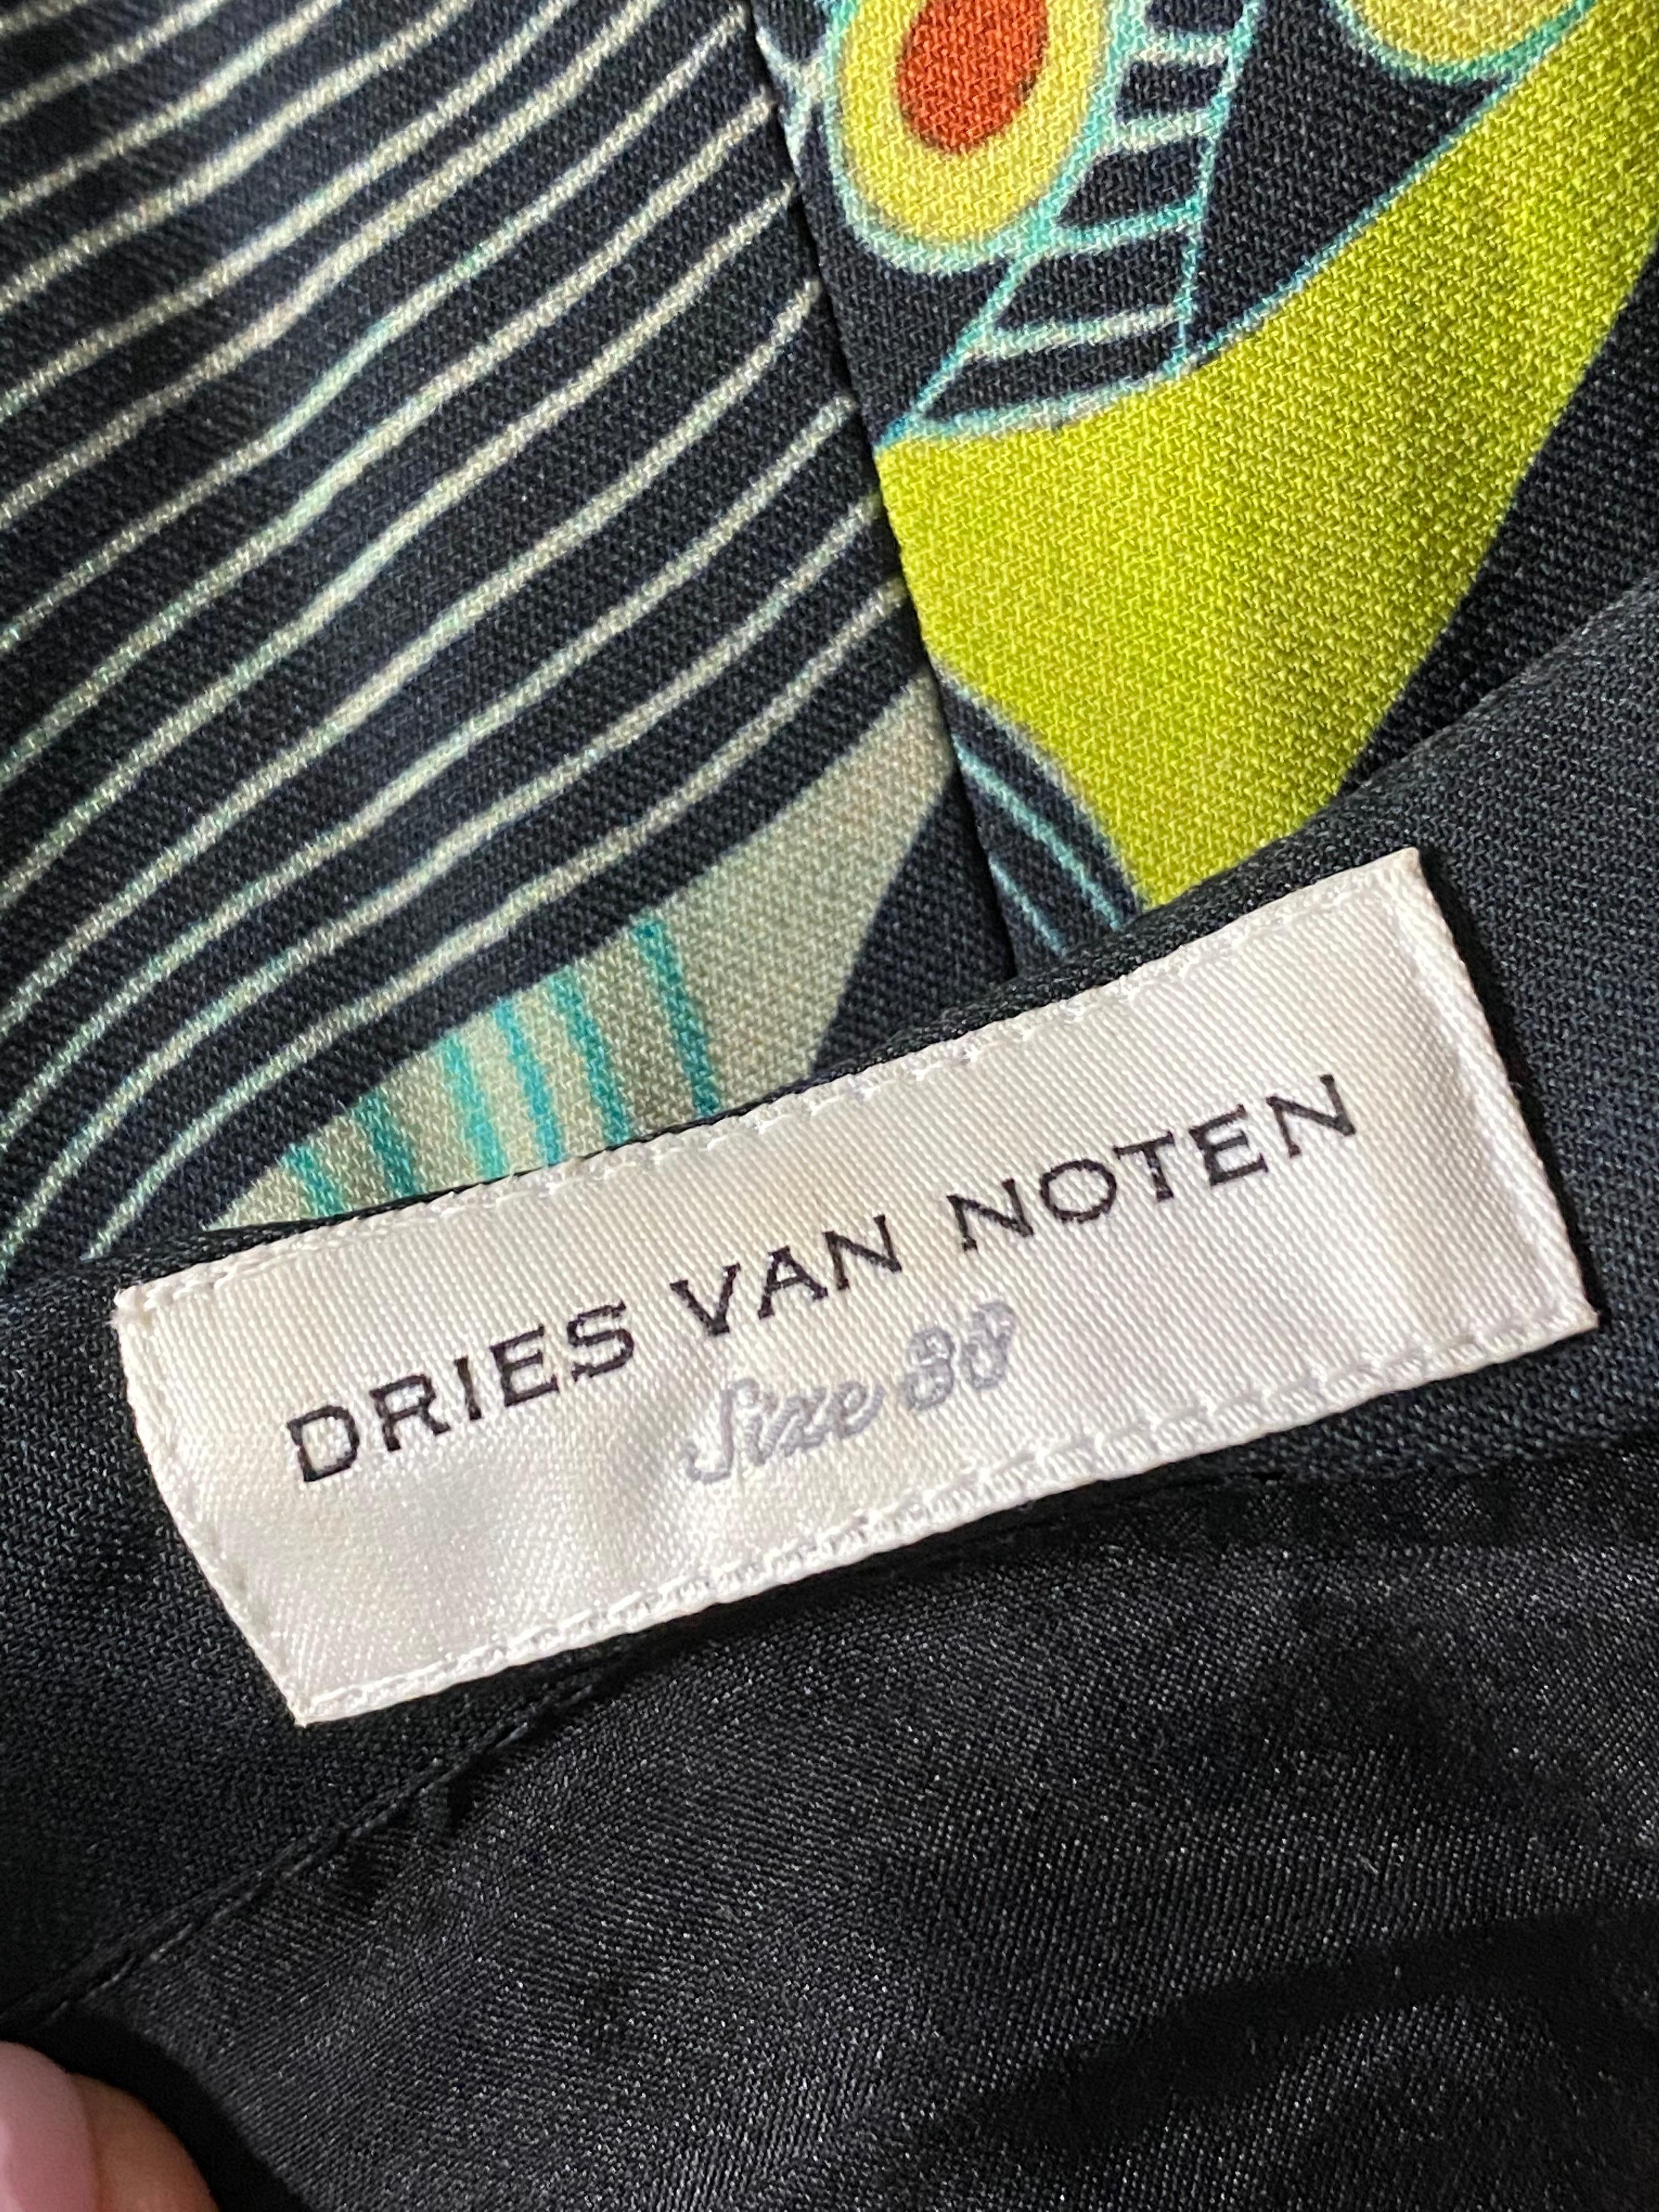 Dries Van Noten Black & Multicolor Wrap Maxi Dress, Size 38 5